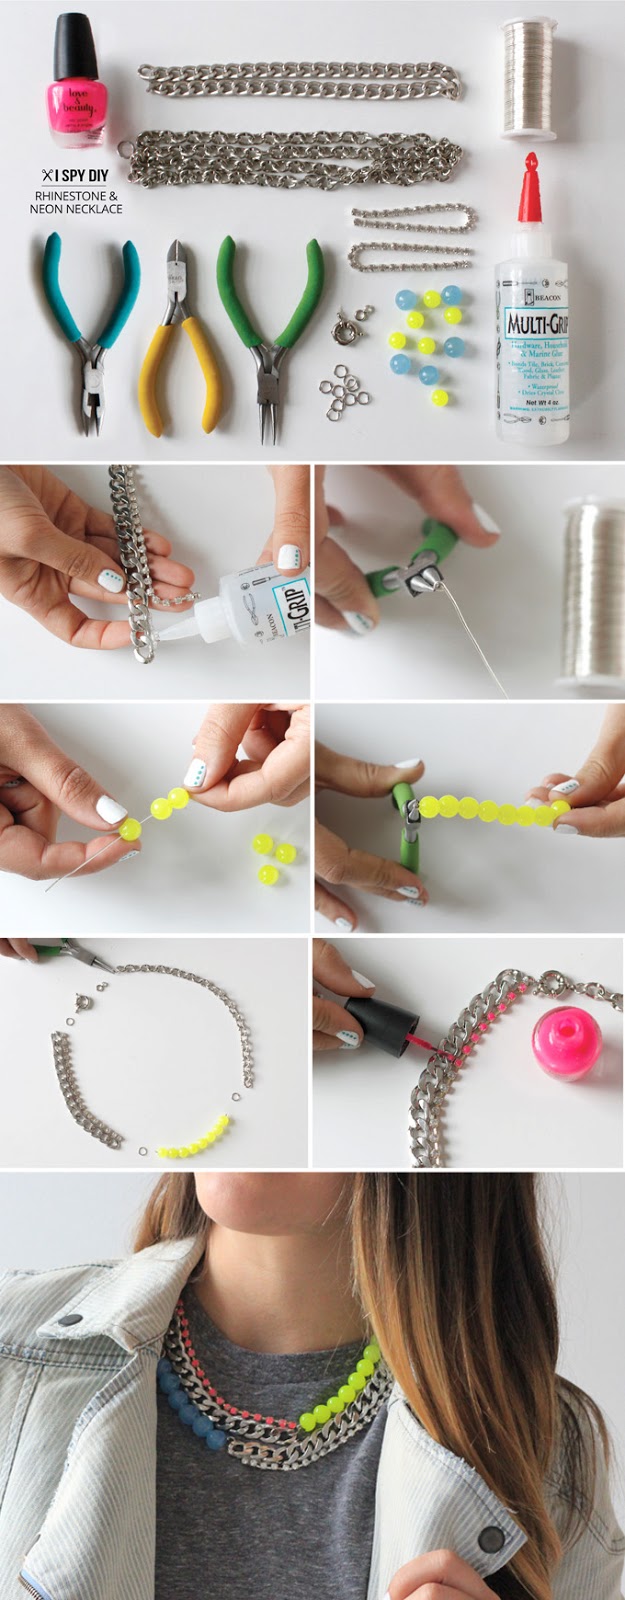 18 Absolutely Amazing DIY Jewelry Ideas